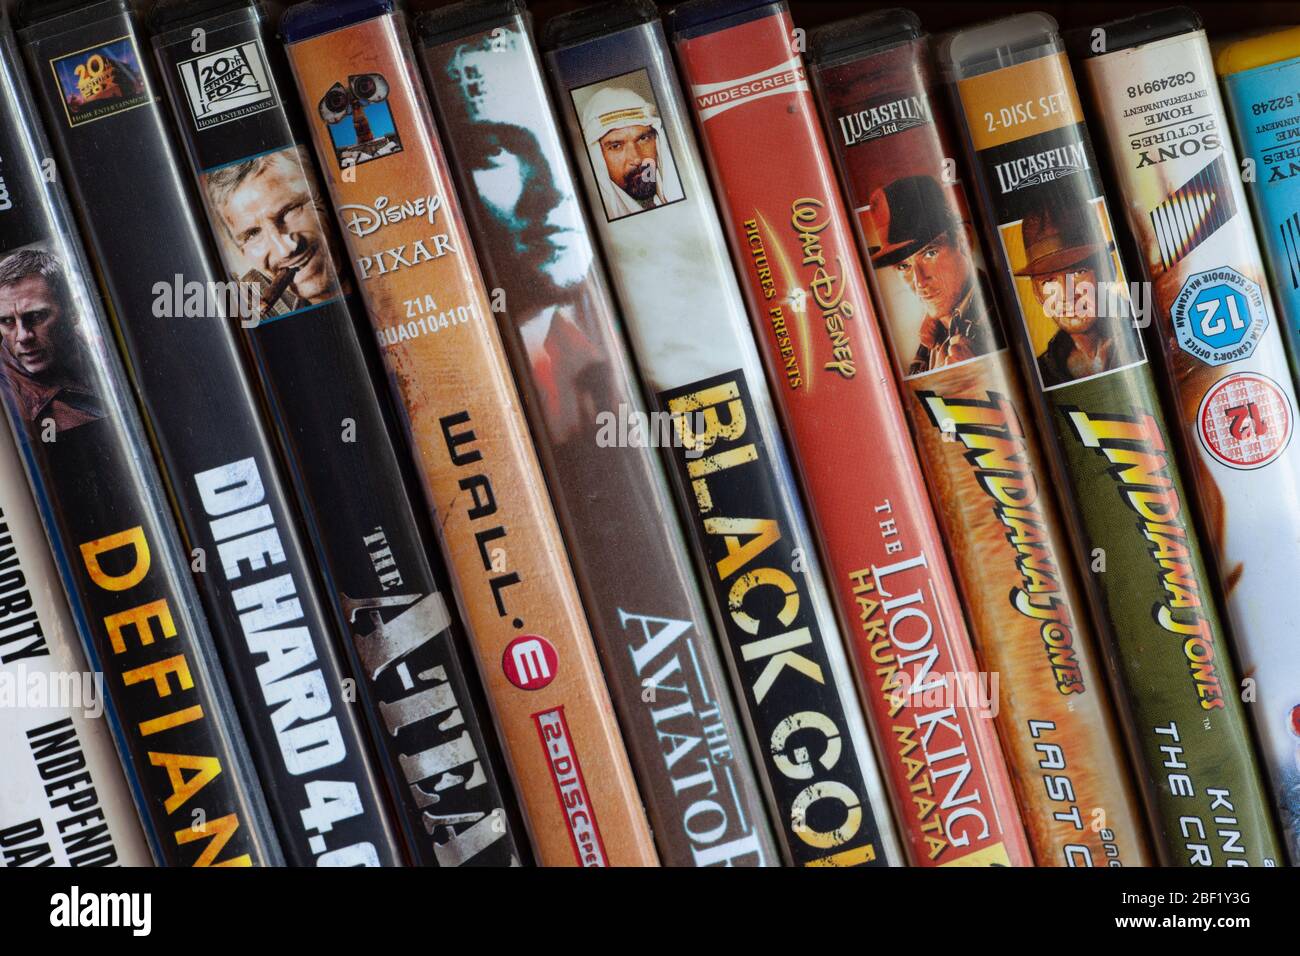 Row of DVD's on shelf. UK Stock Photo